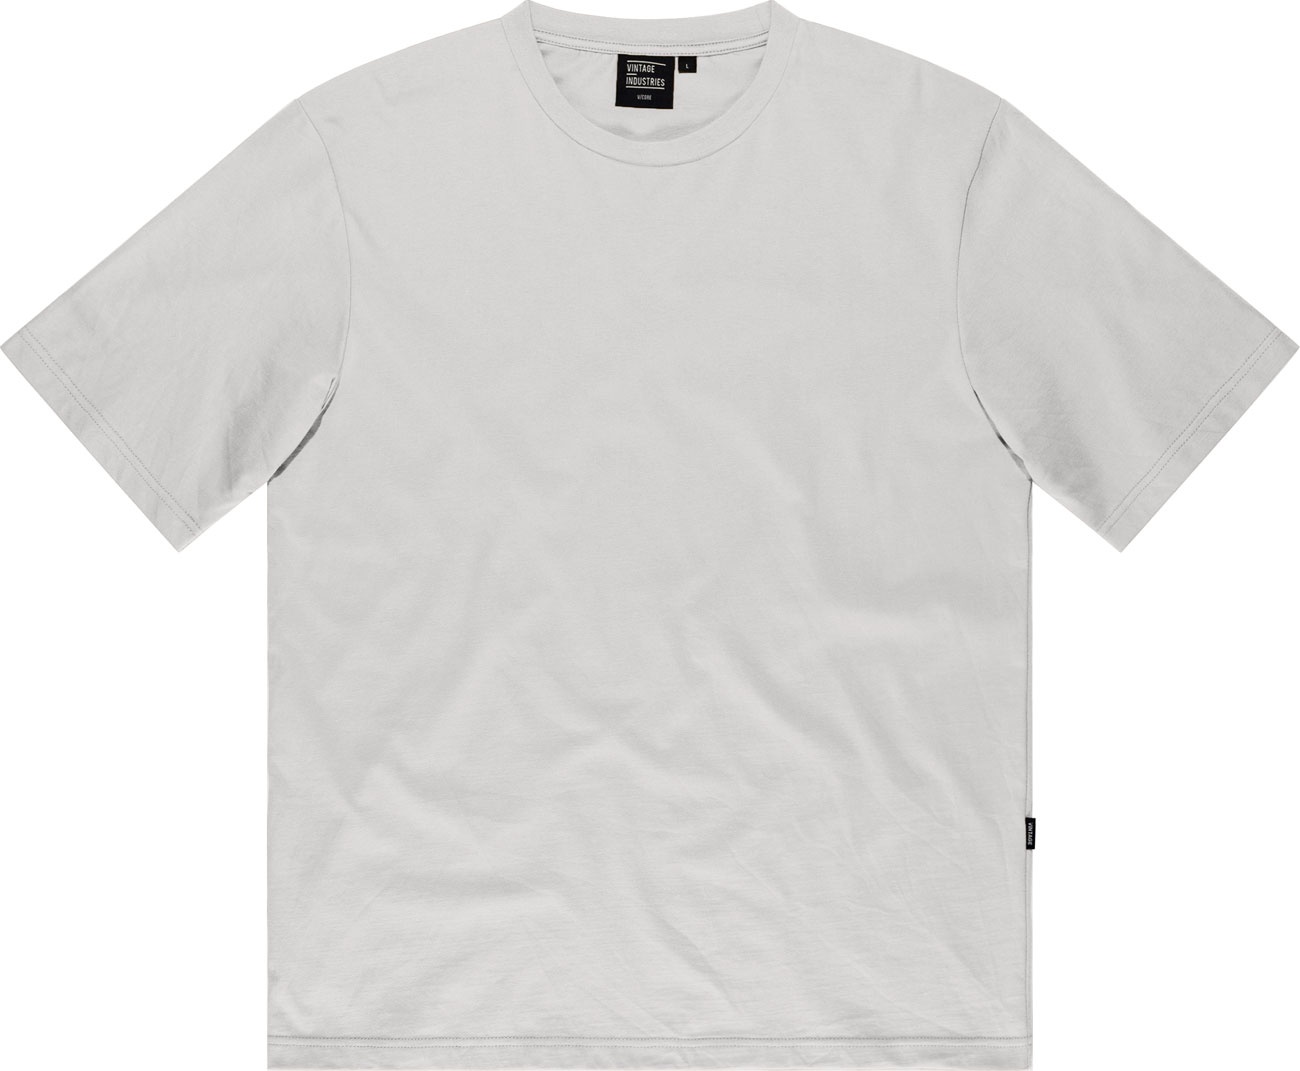 Vintage Industries Lex, t-shirt - Blanc - XXL